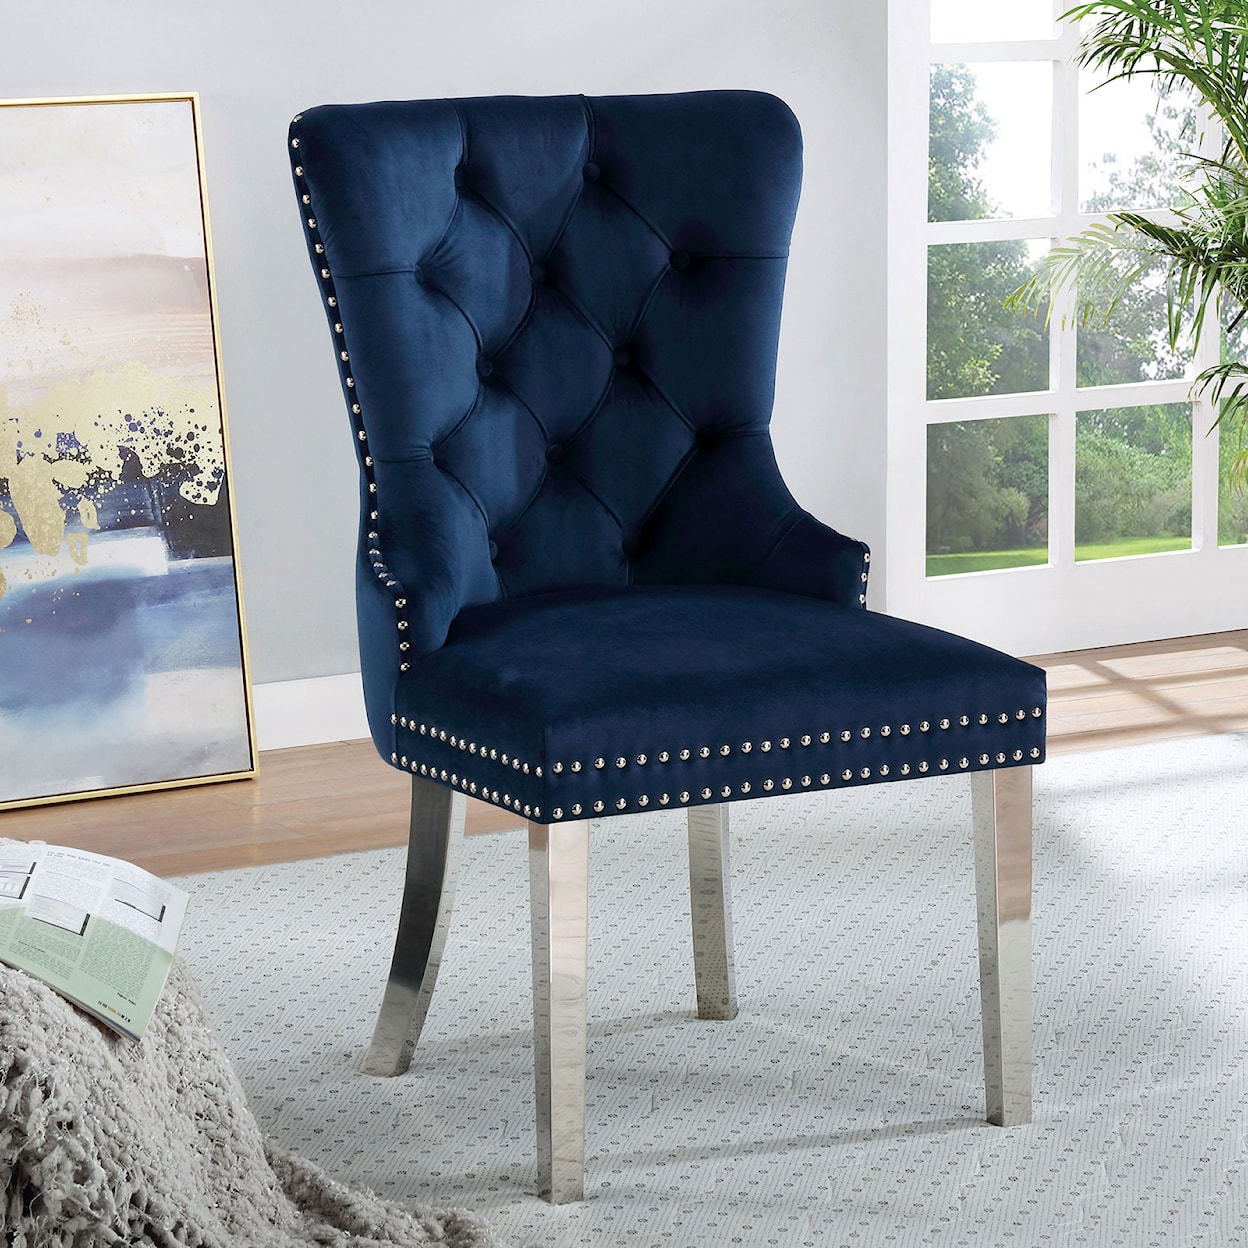 Furniture of America Jewett Accent Chair